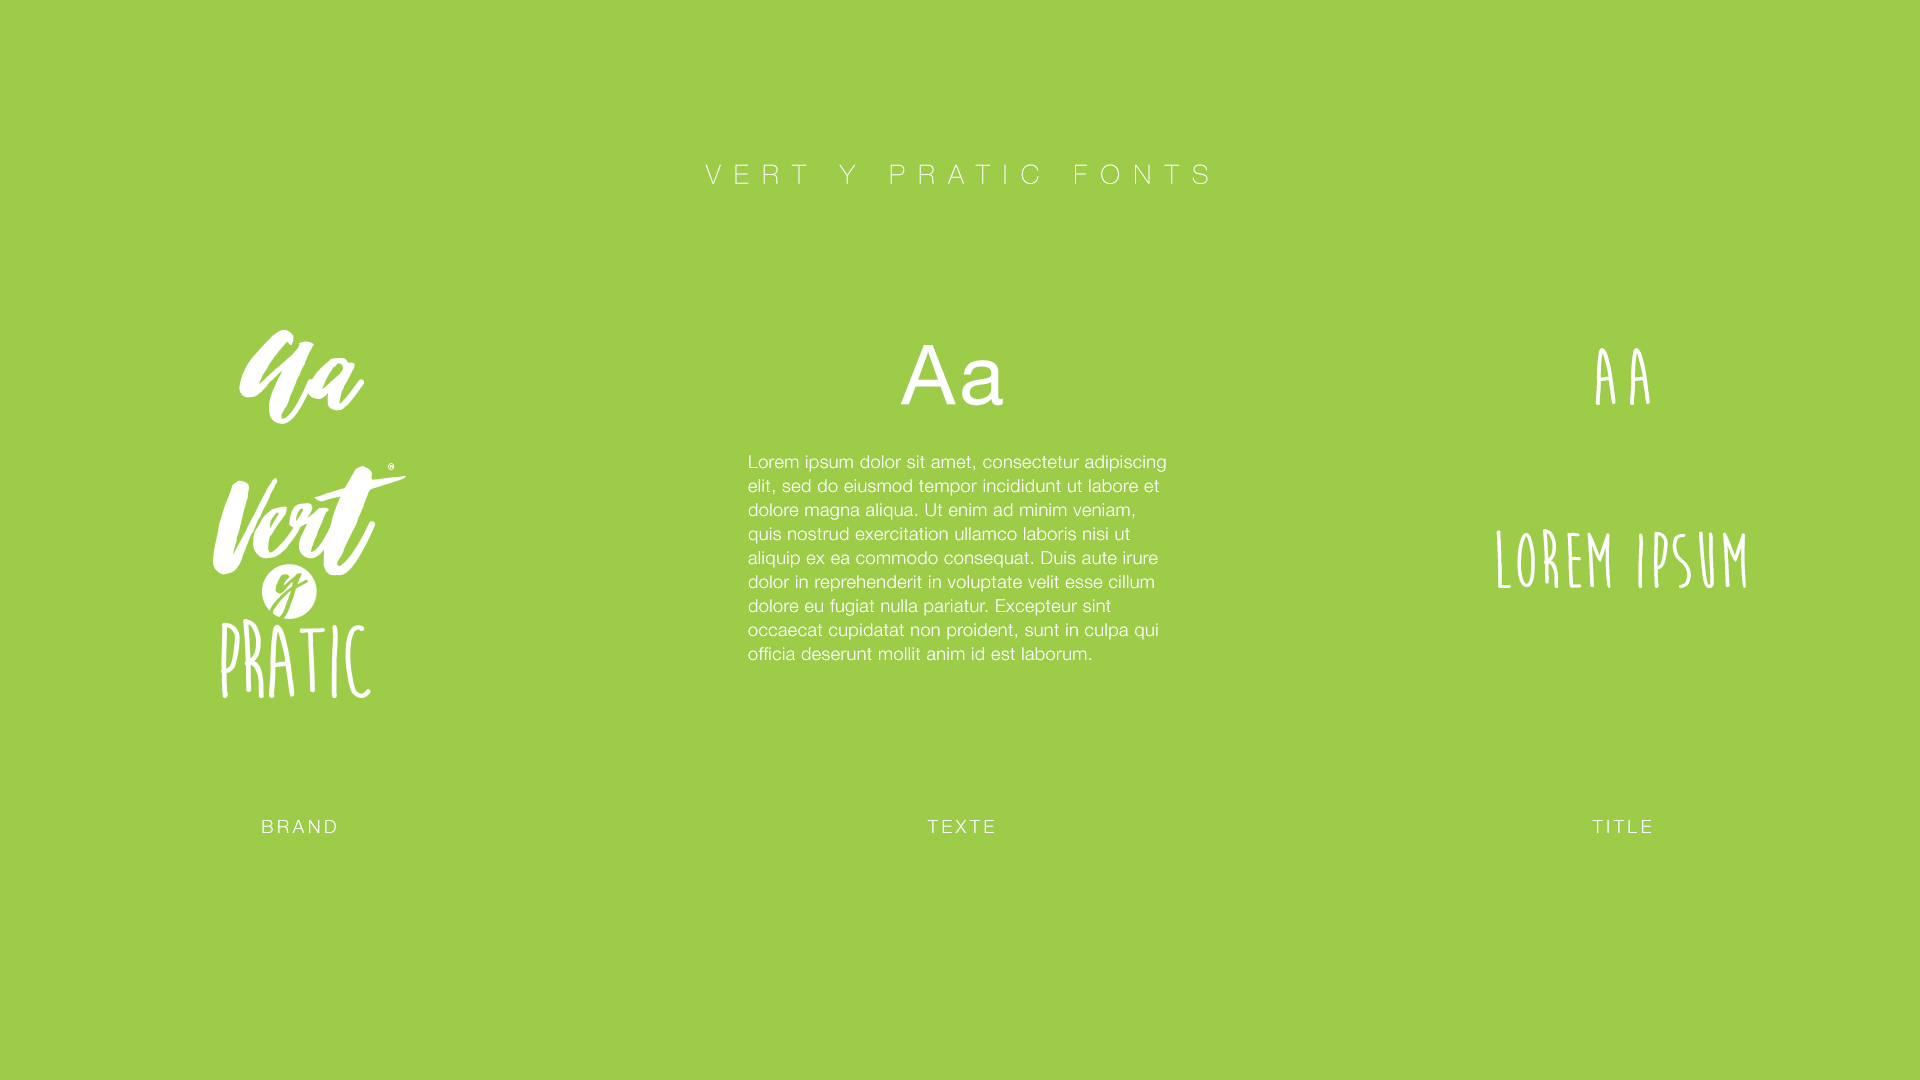 Typographies Vert y Pratic